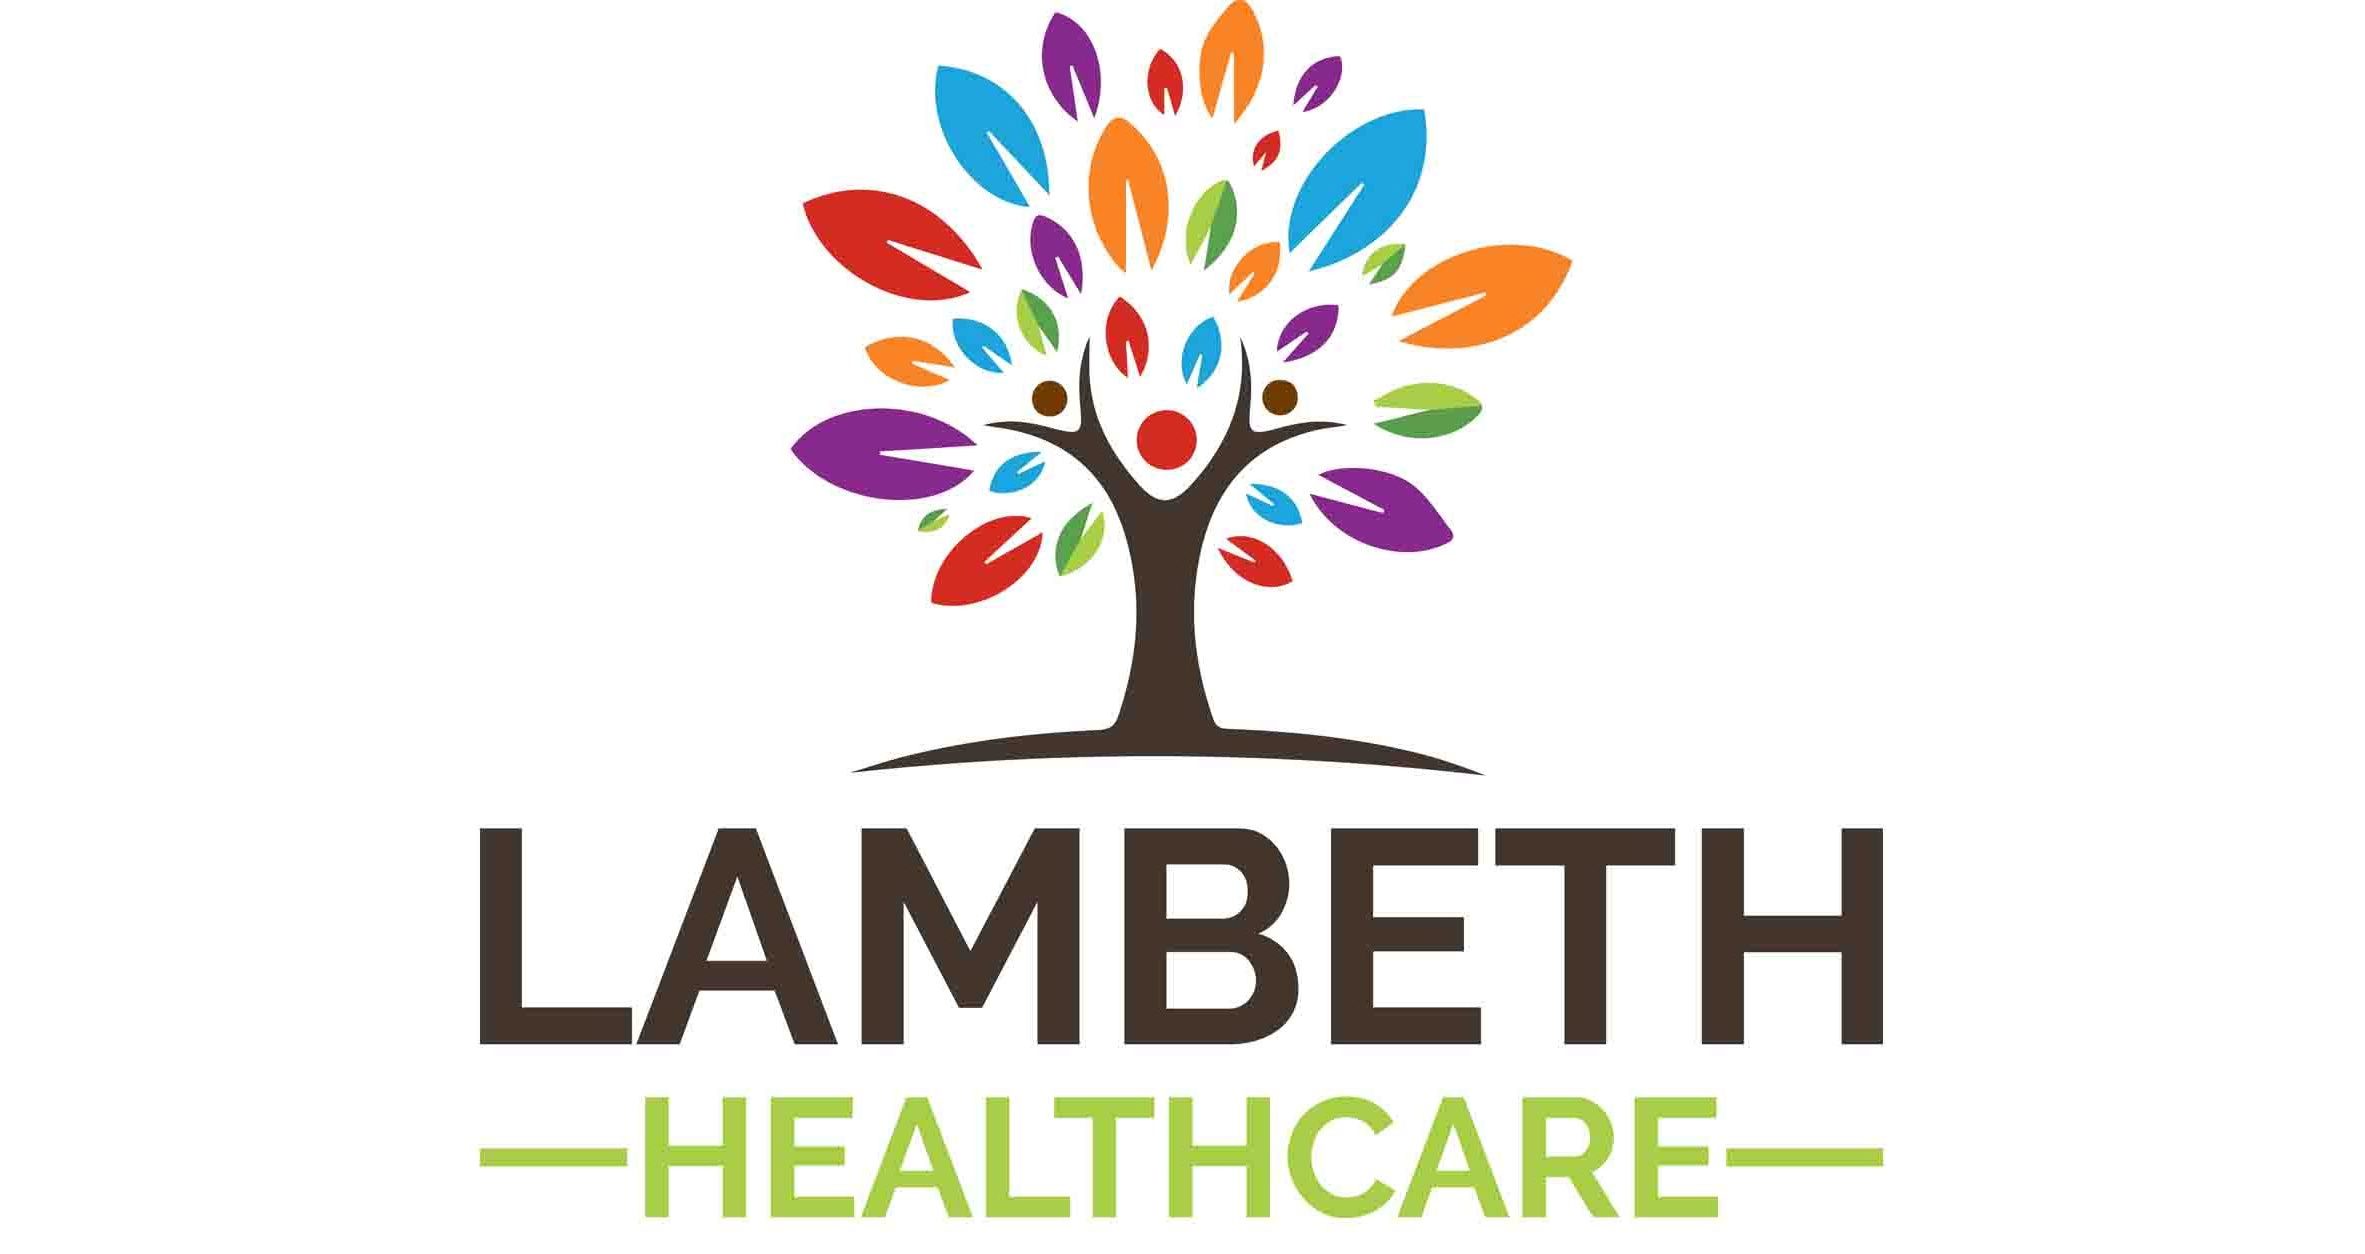 Lambeth Healthcare